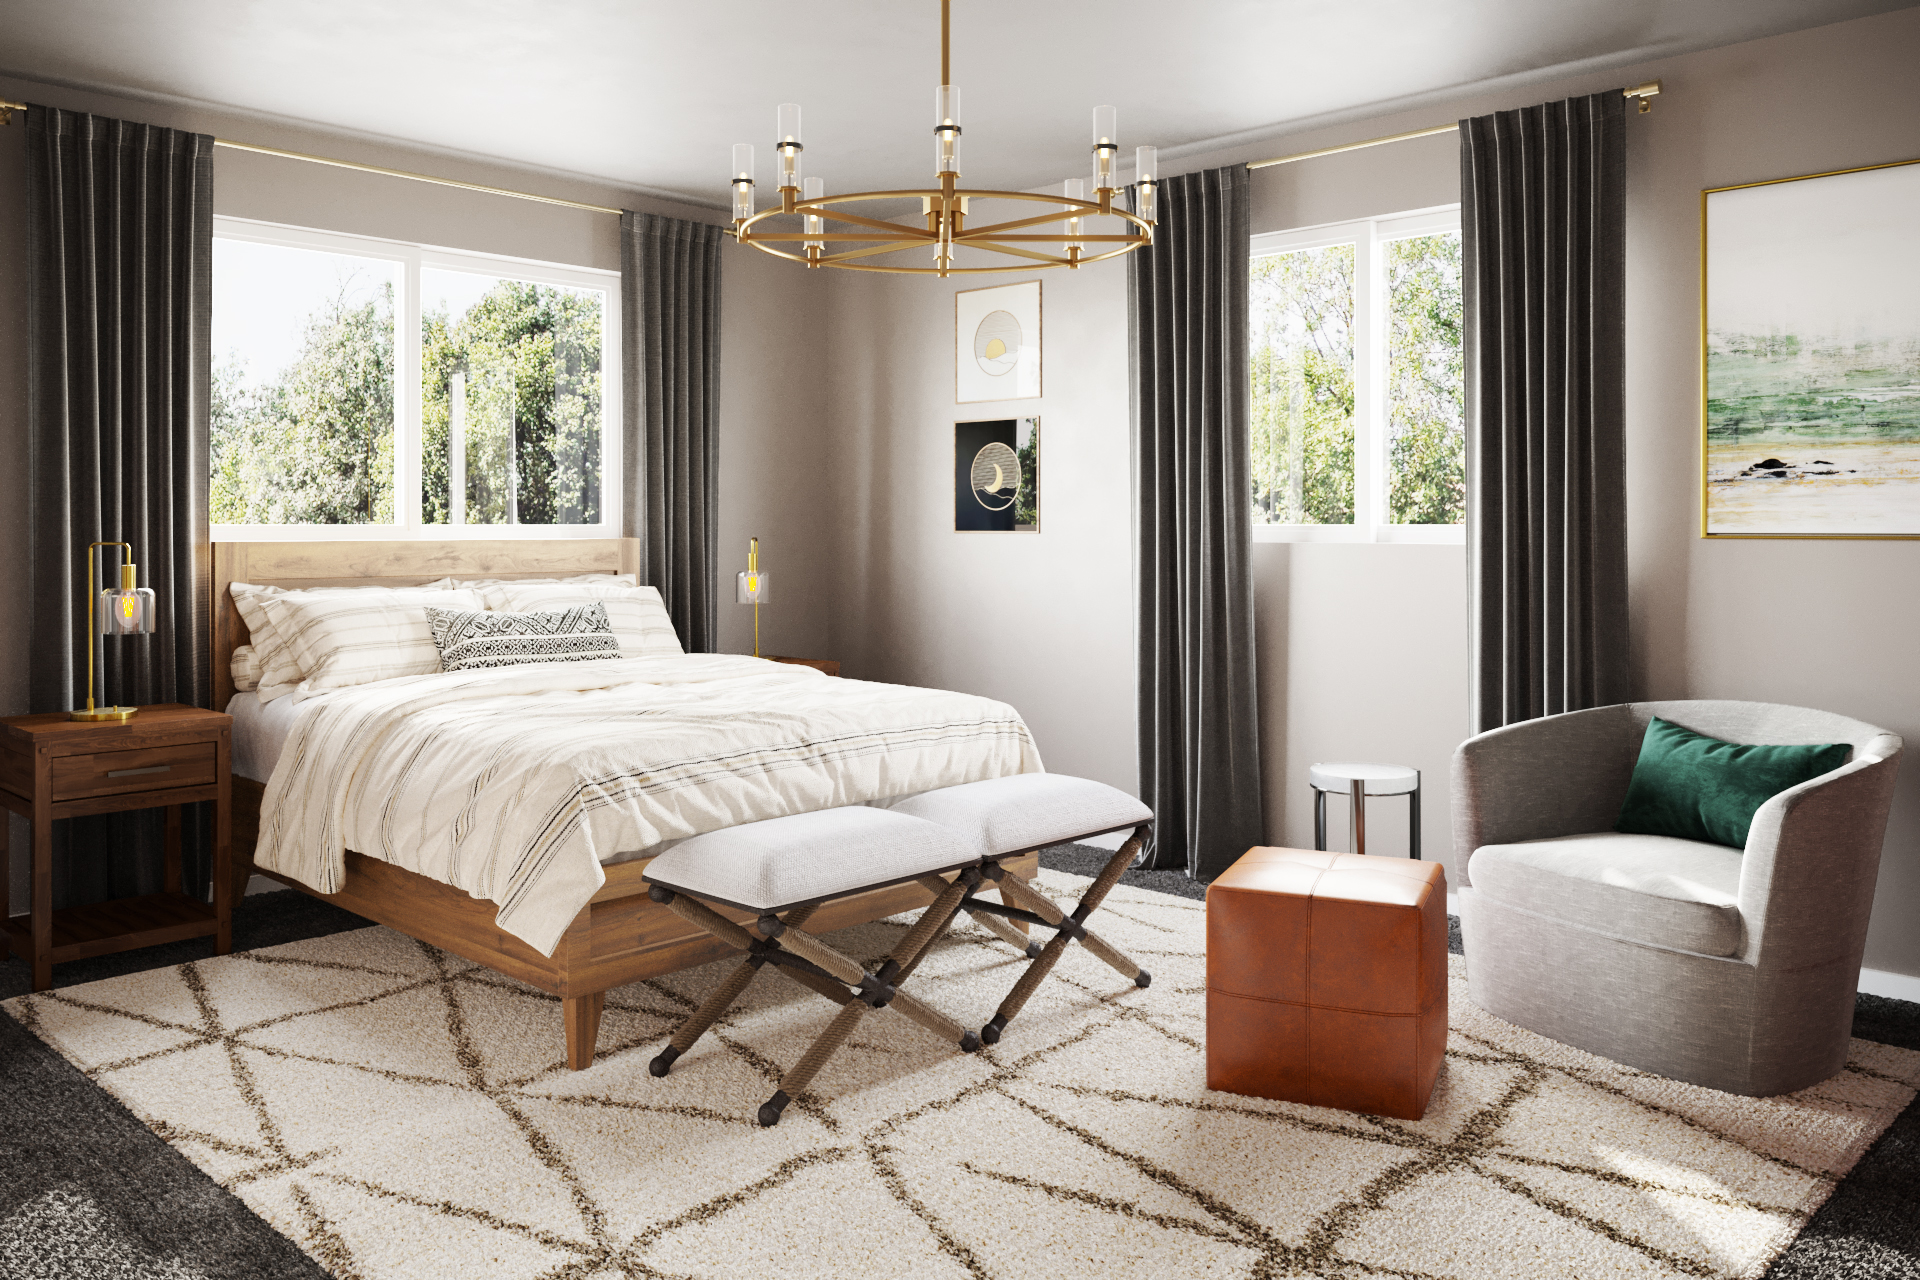 Interior design for bedroom images